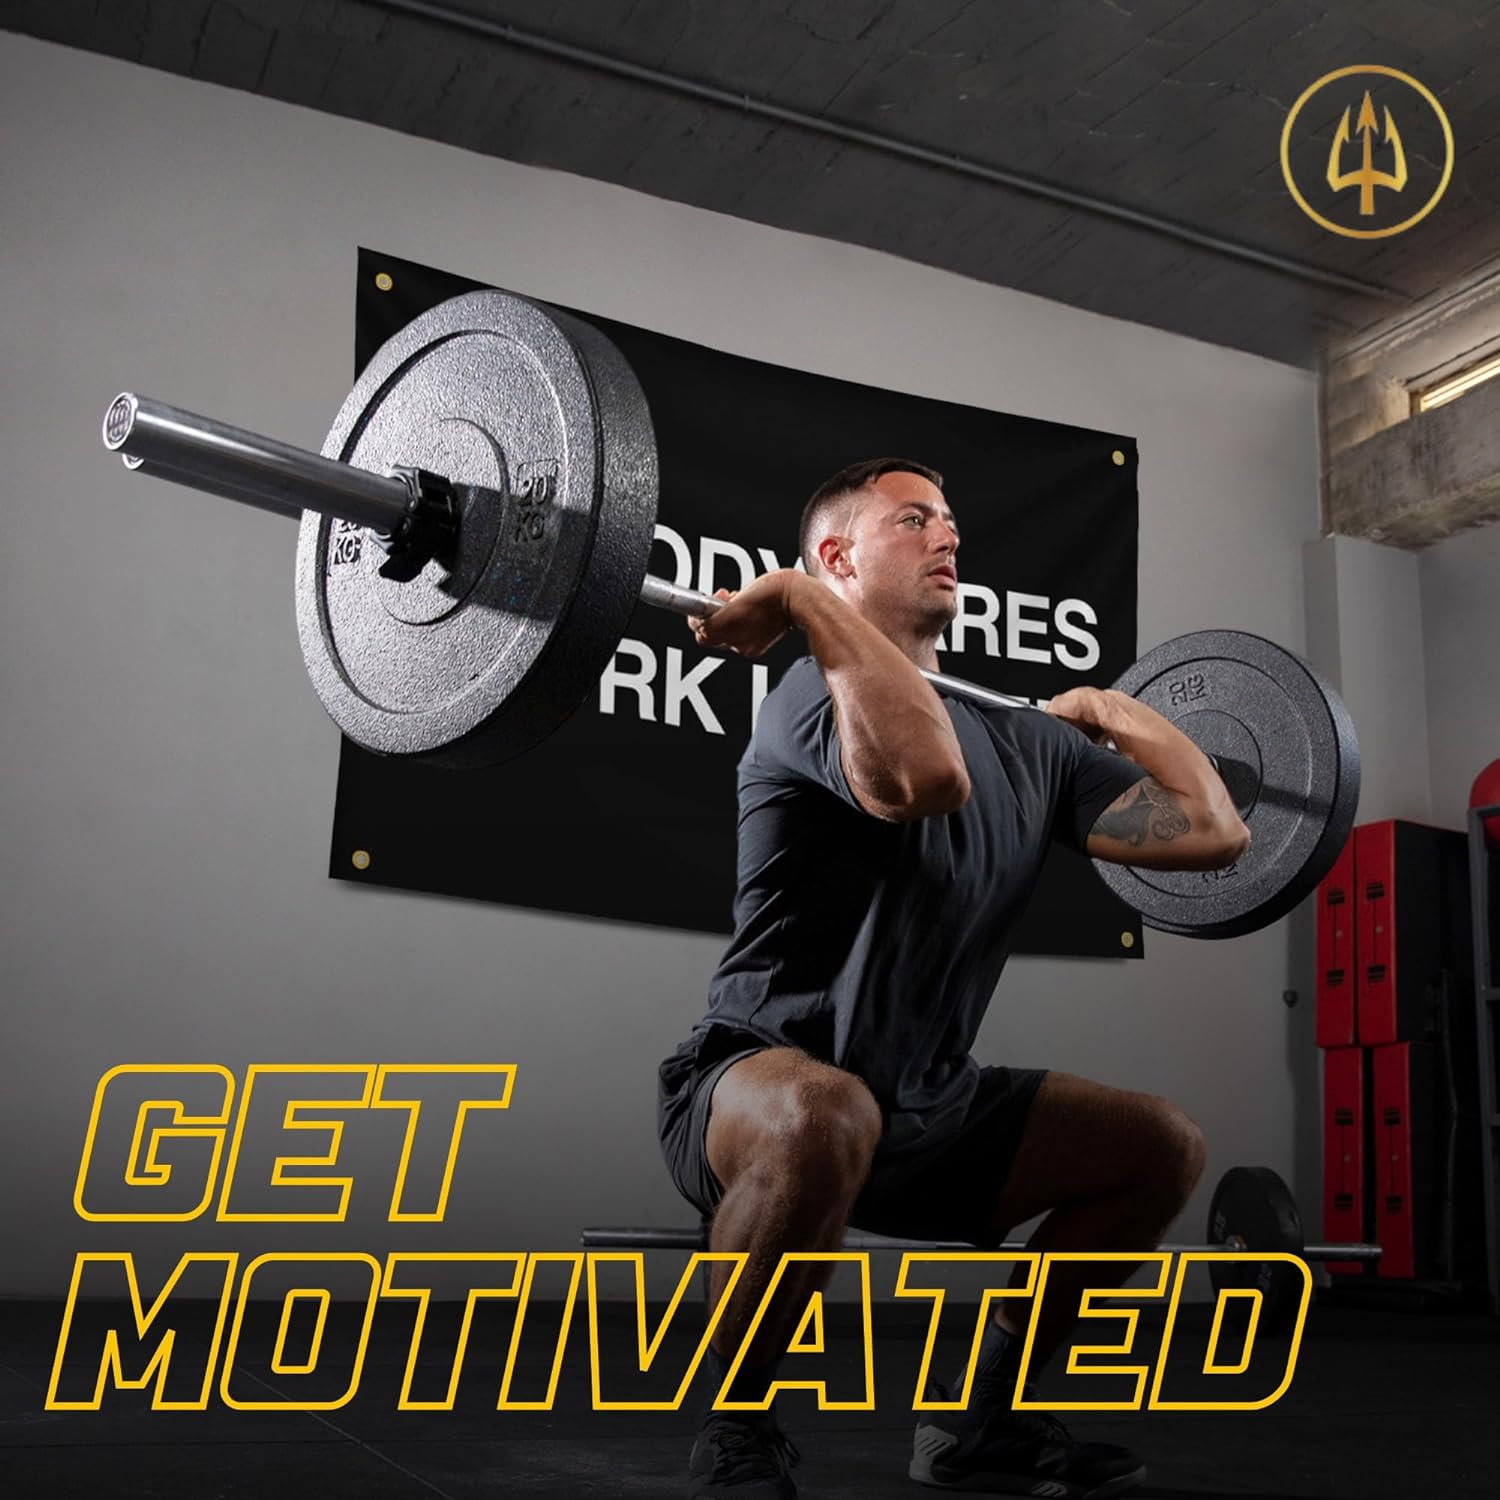 Gold Trident Nobody Cares Motivational Gym Banner